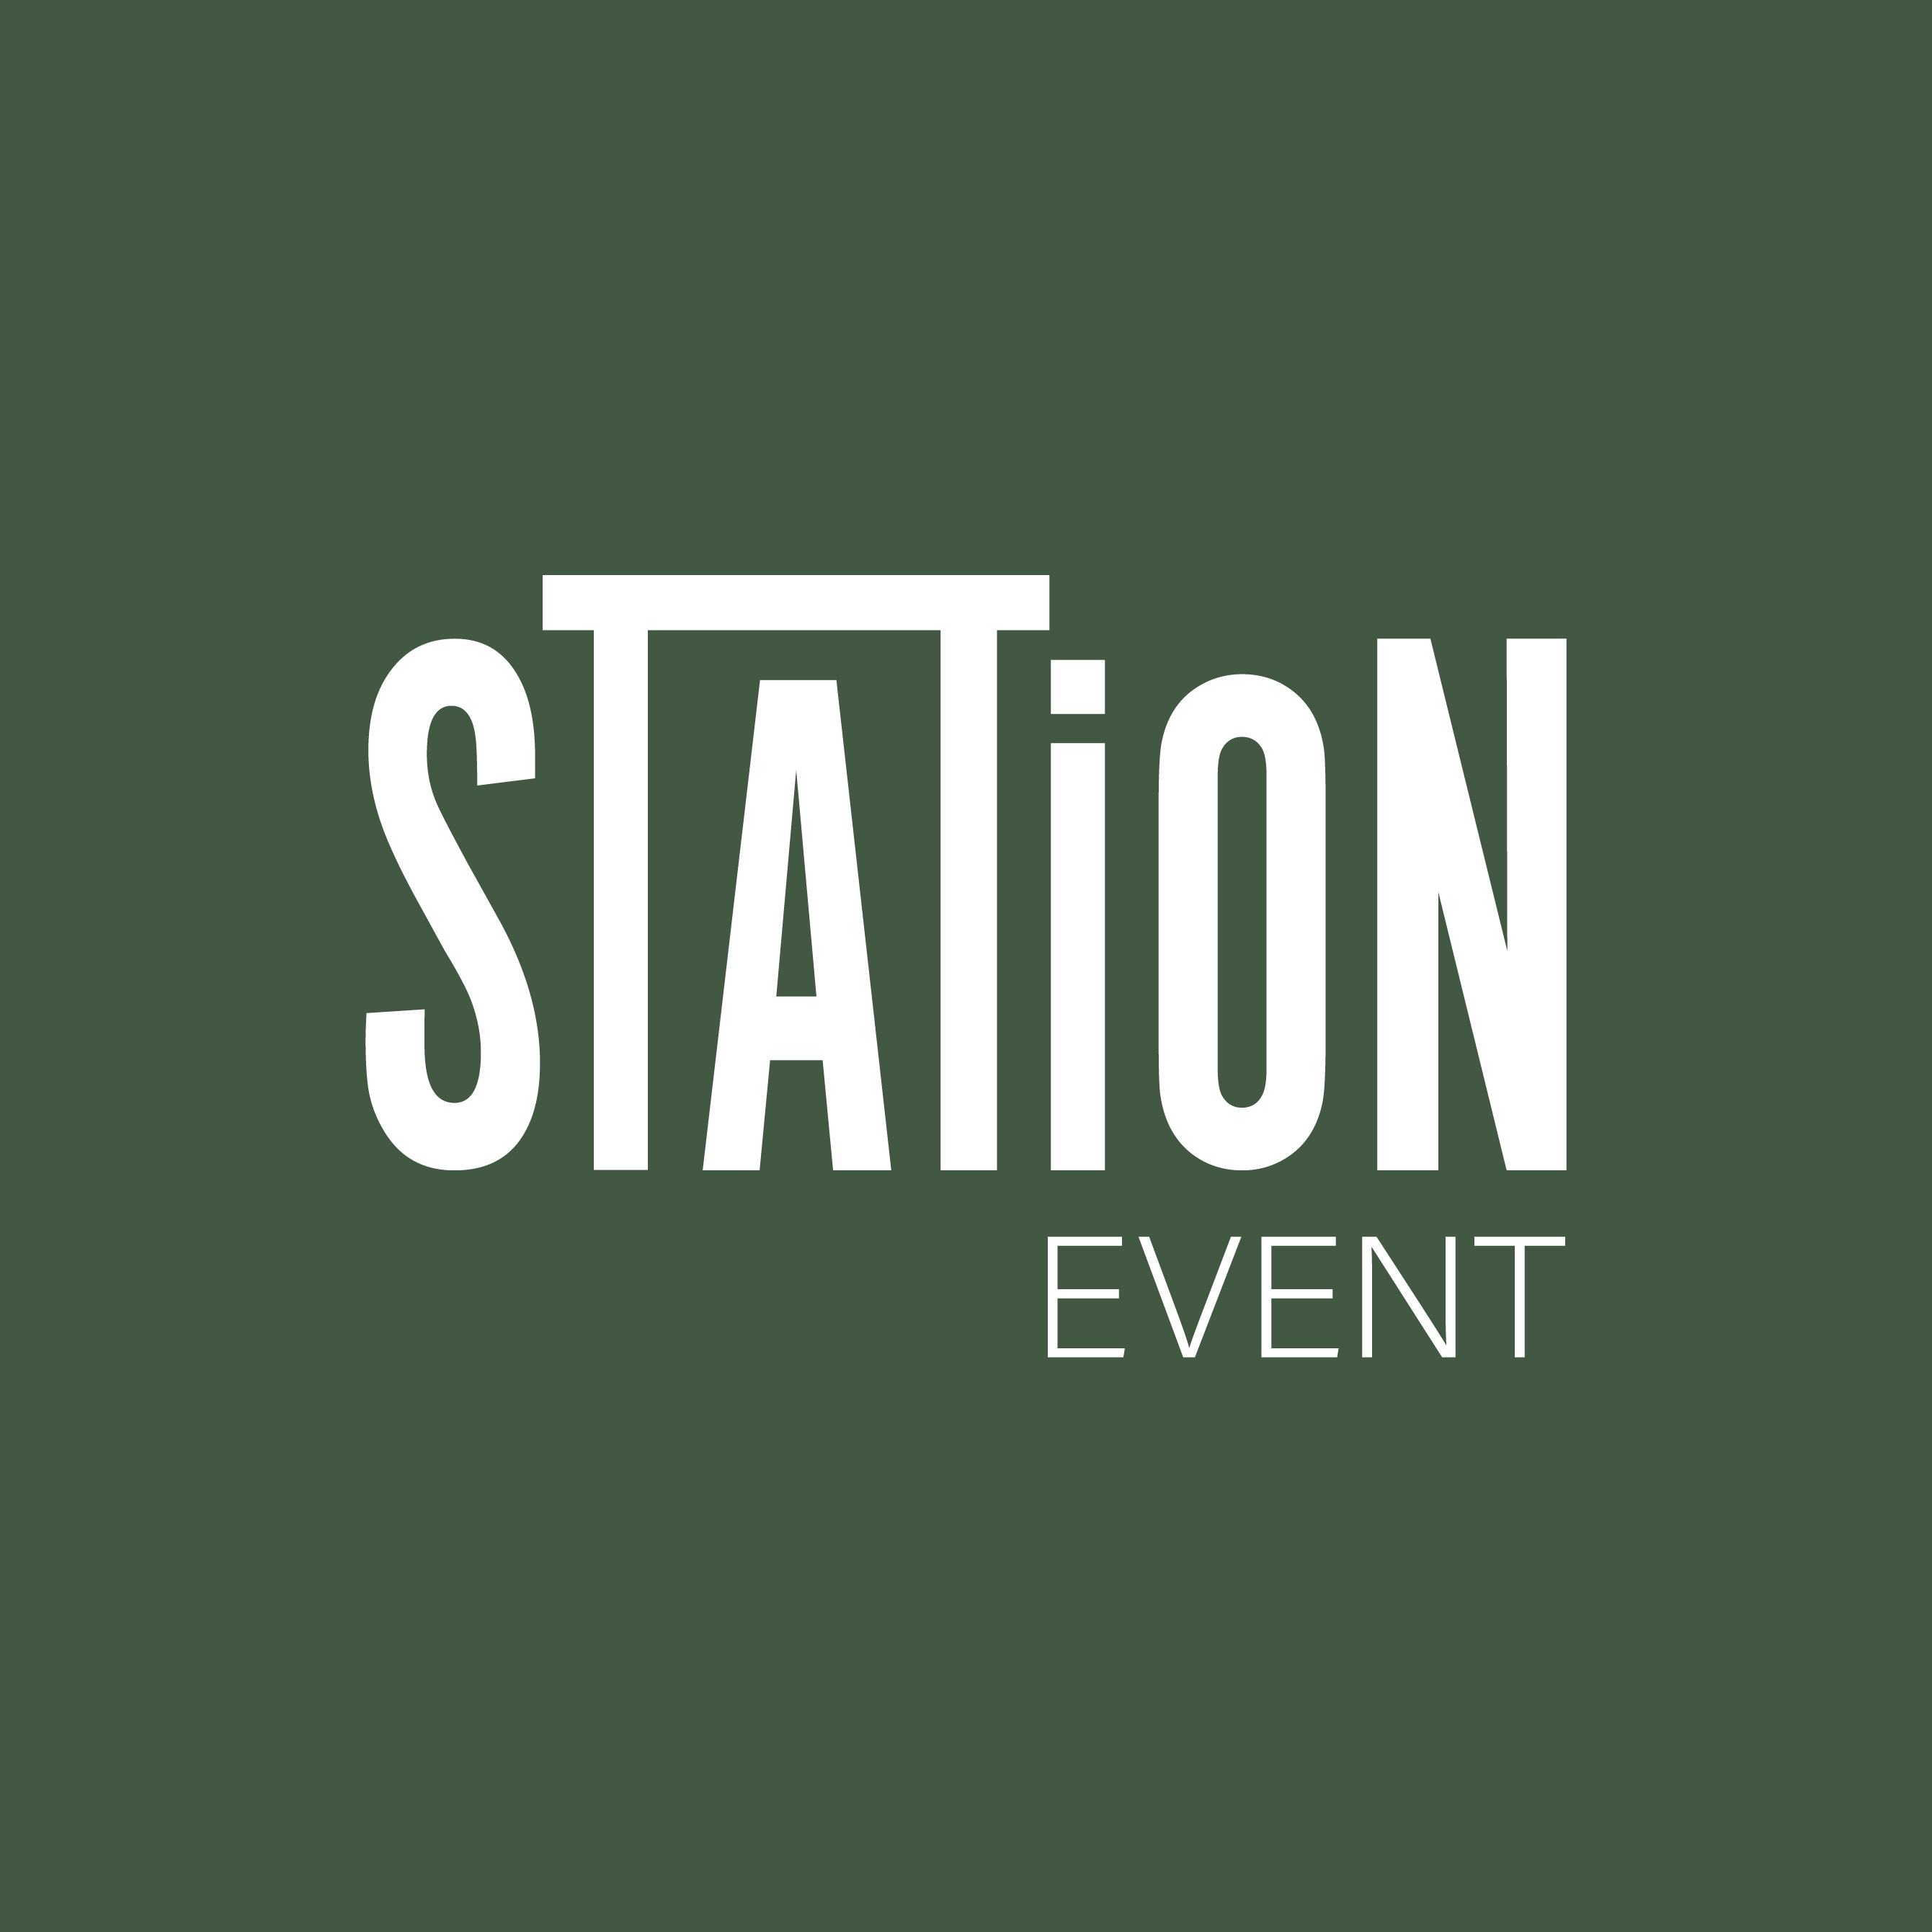 Station Event